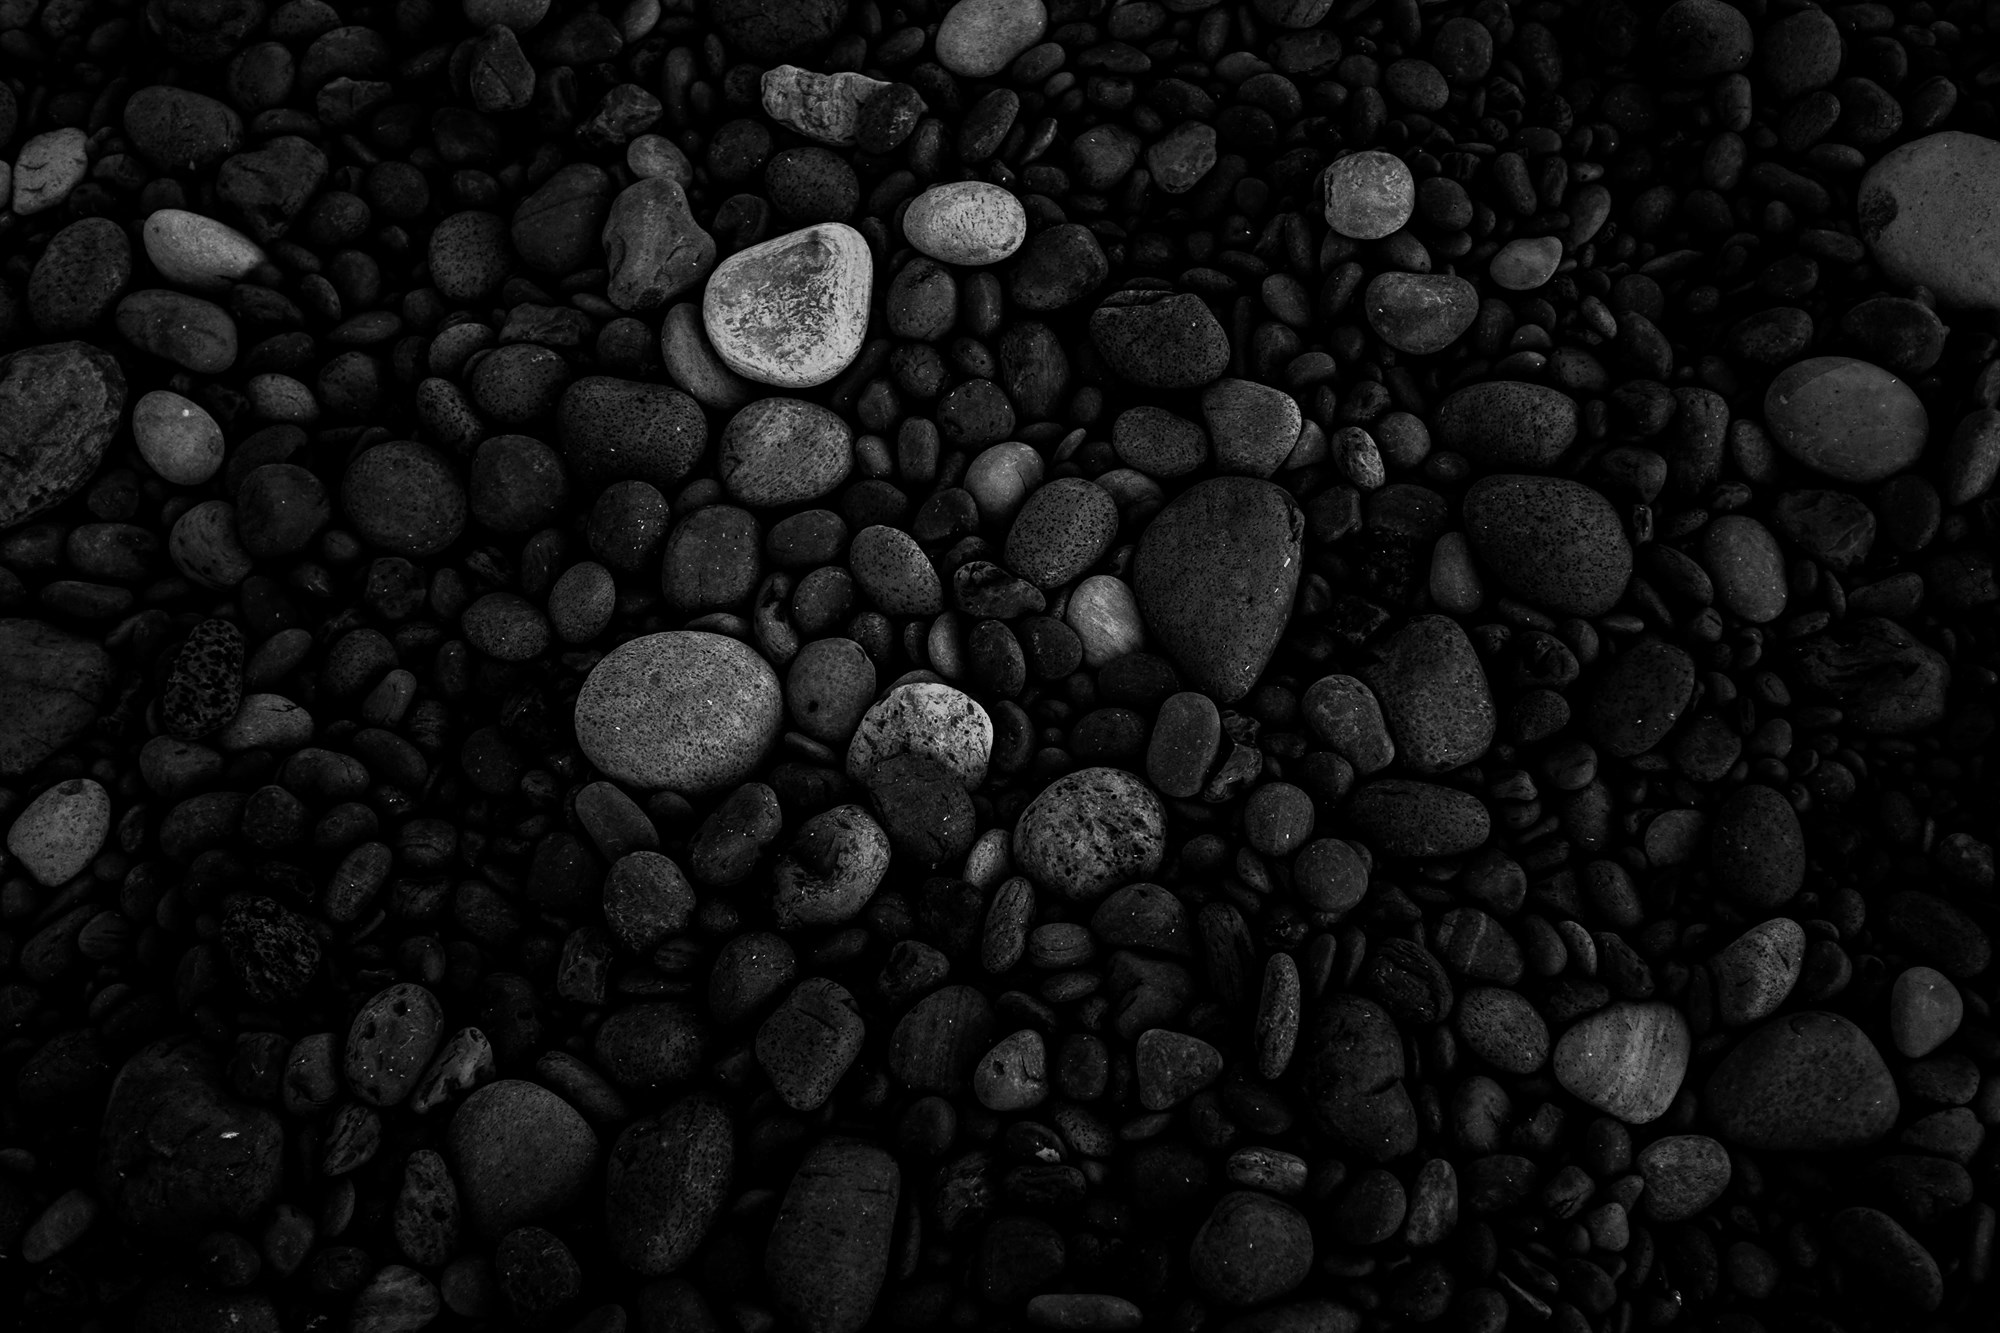 Black Lava Pearl Stones at Djúpalónssandur beach, Iceland